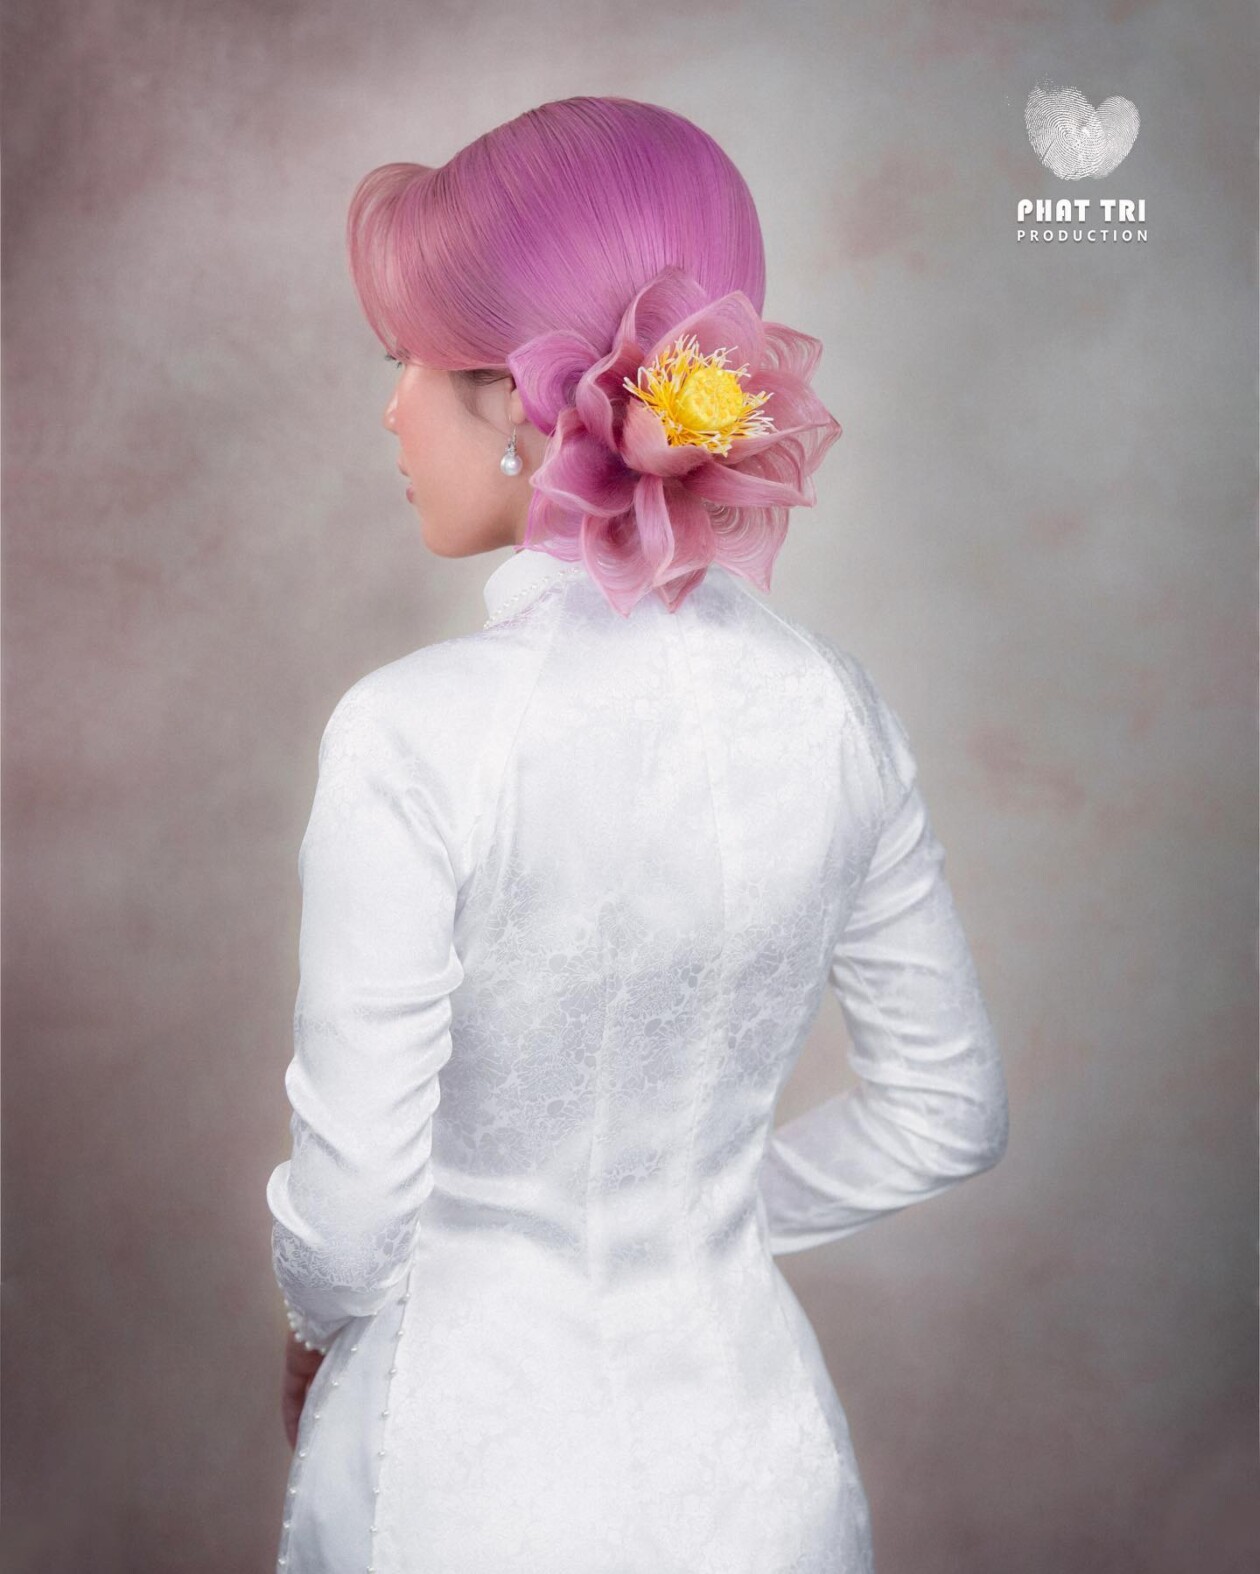 Beautiful Hairstyles That Look Like Ornate Flowers By Nguyen Phat Tri (13)